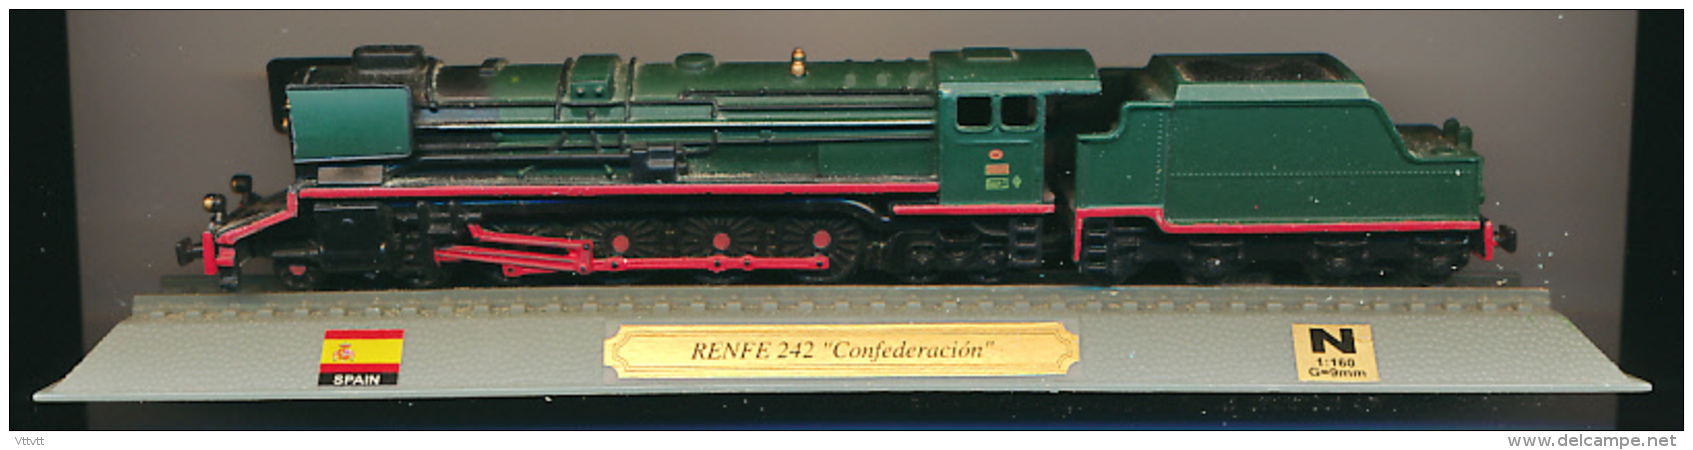 Locomotive : Renfe 242 "Confederacion", Echelle N 1/160, G = 9 Mm, Spain Espagne - Locomotieven